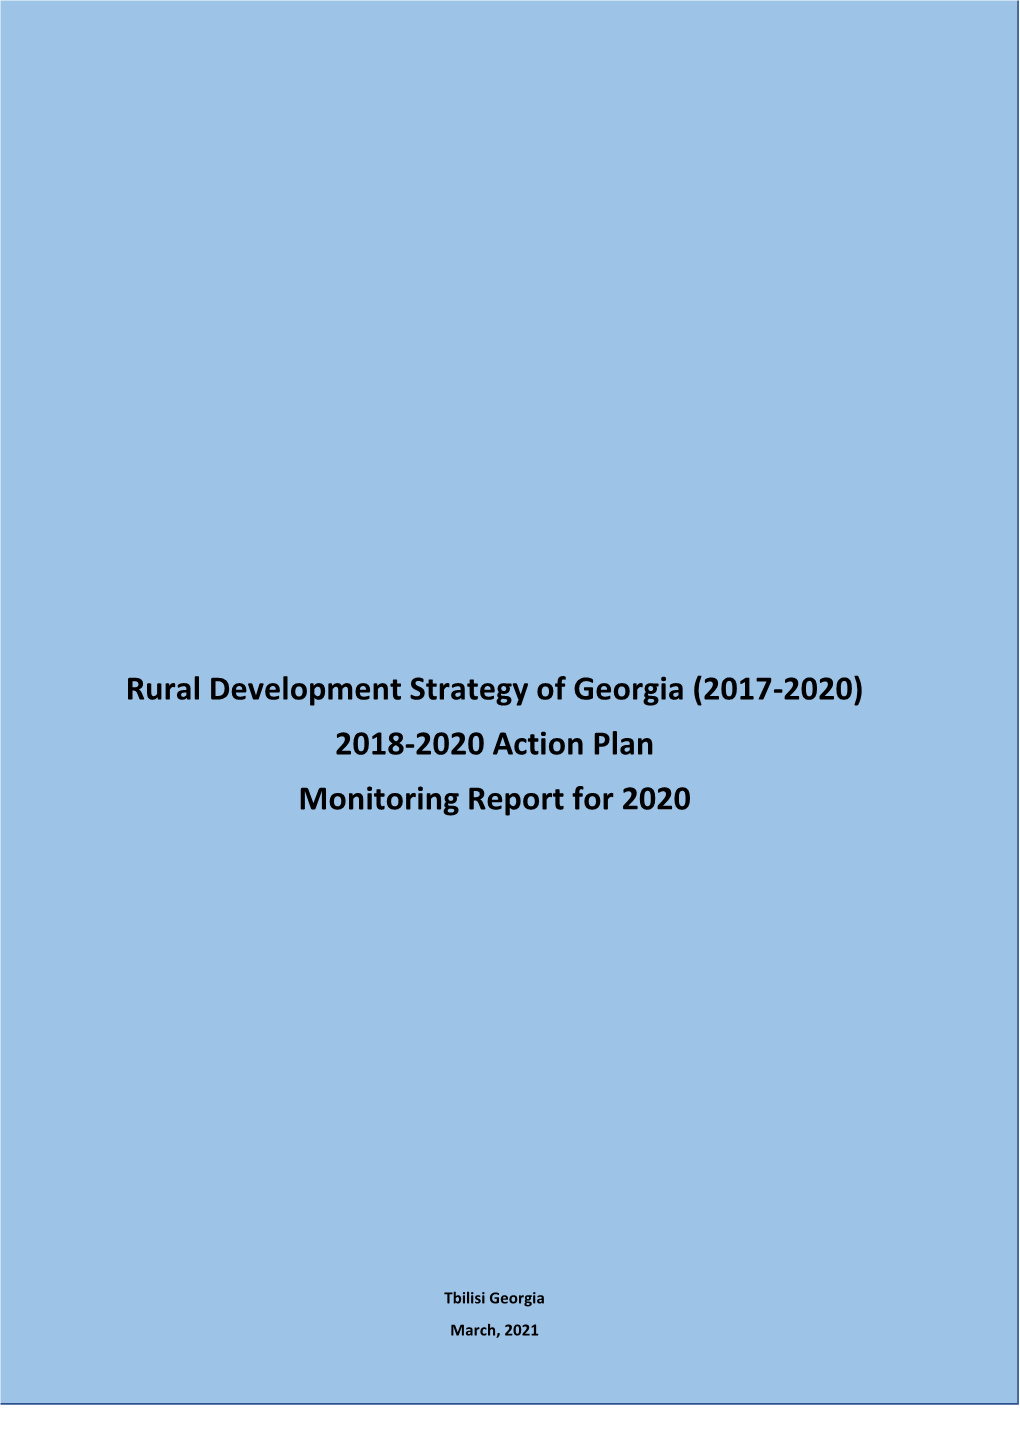 A Rural Development Strategy of Georgia (2017-2020)